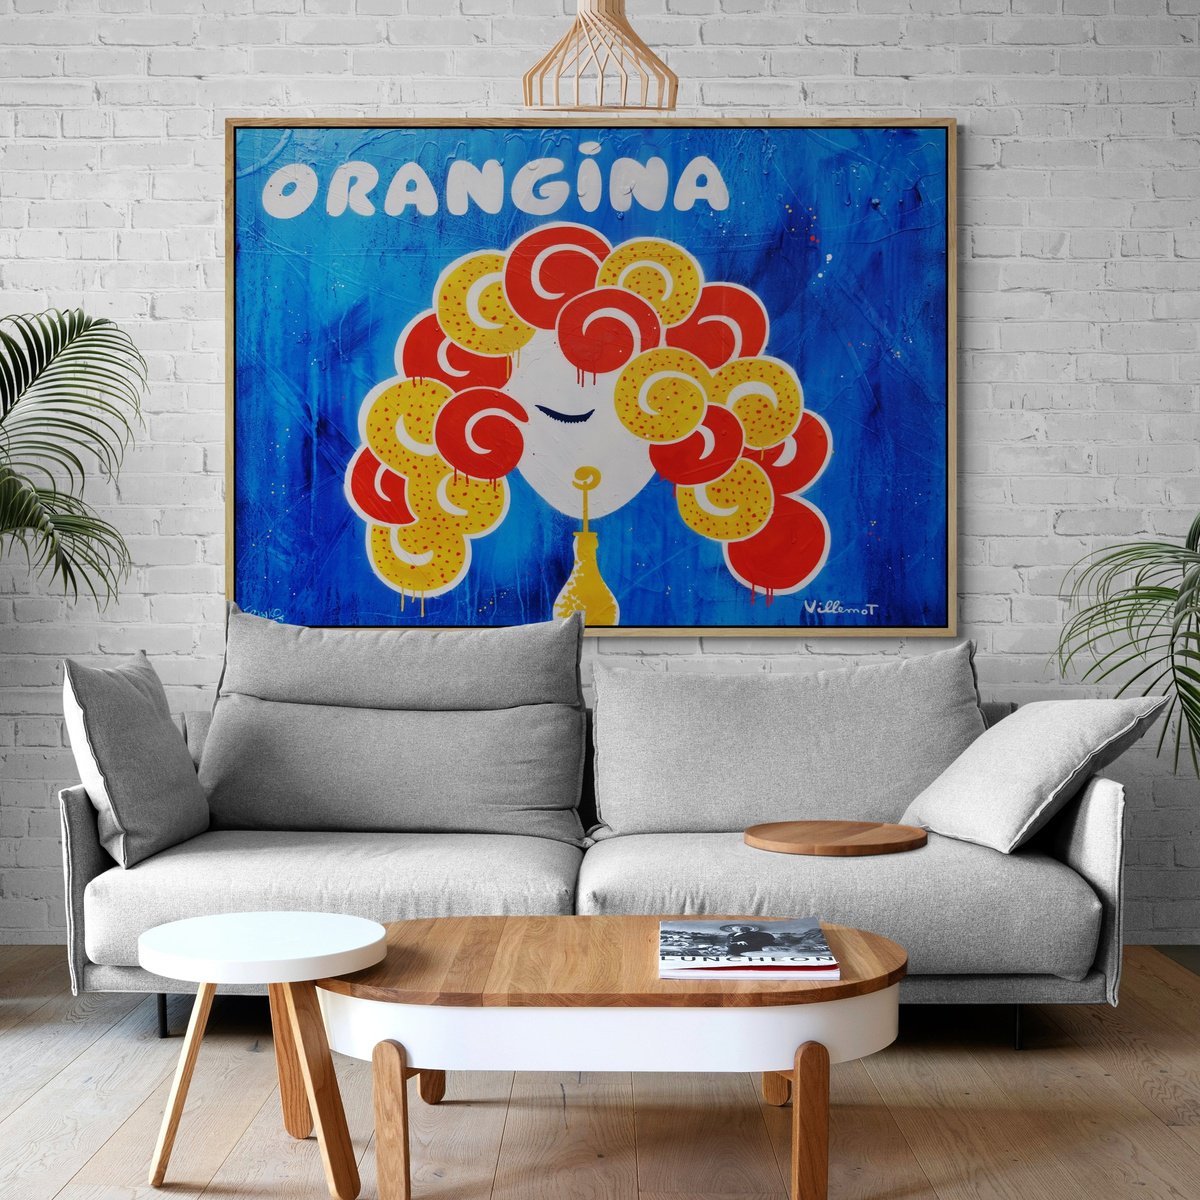 Orangina Blue 140cm x 100cm Textured Urban Pop Art by Franko